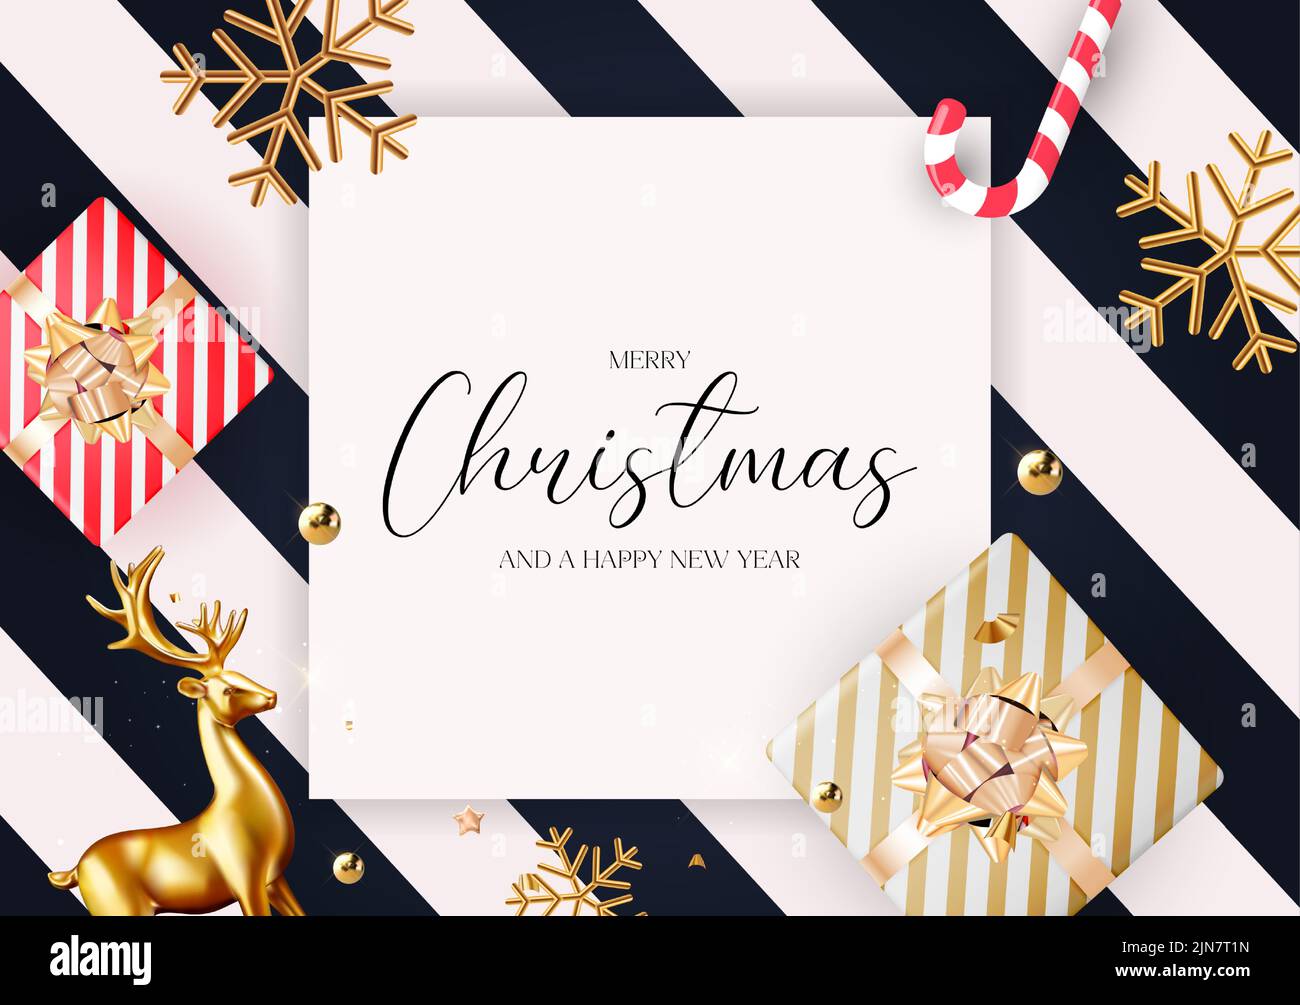 Merry Christmas Greeting Card. Vector Illustration. EPS10 Stock Vector